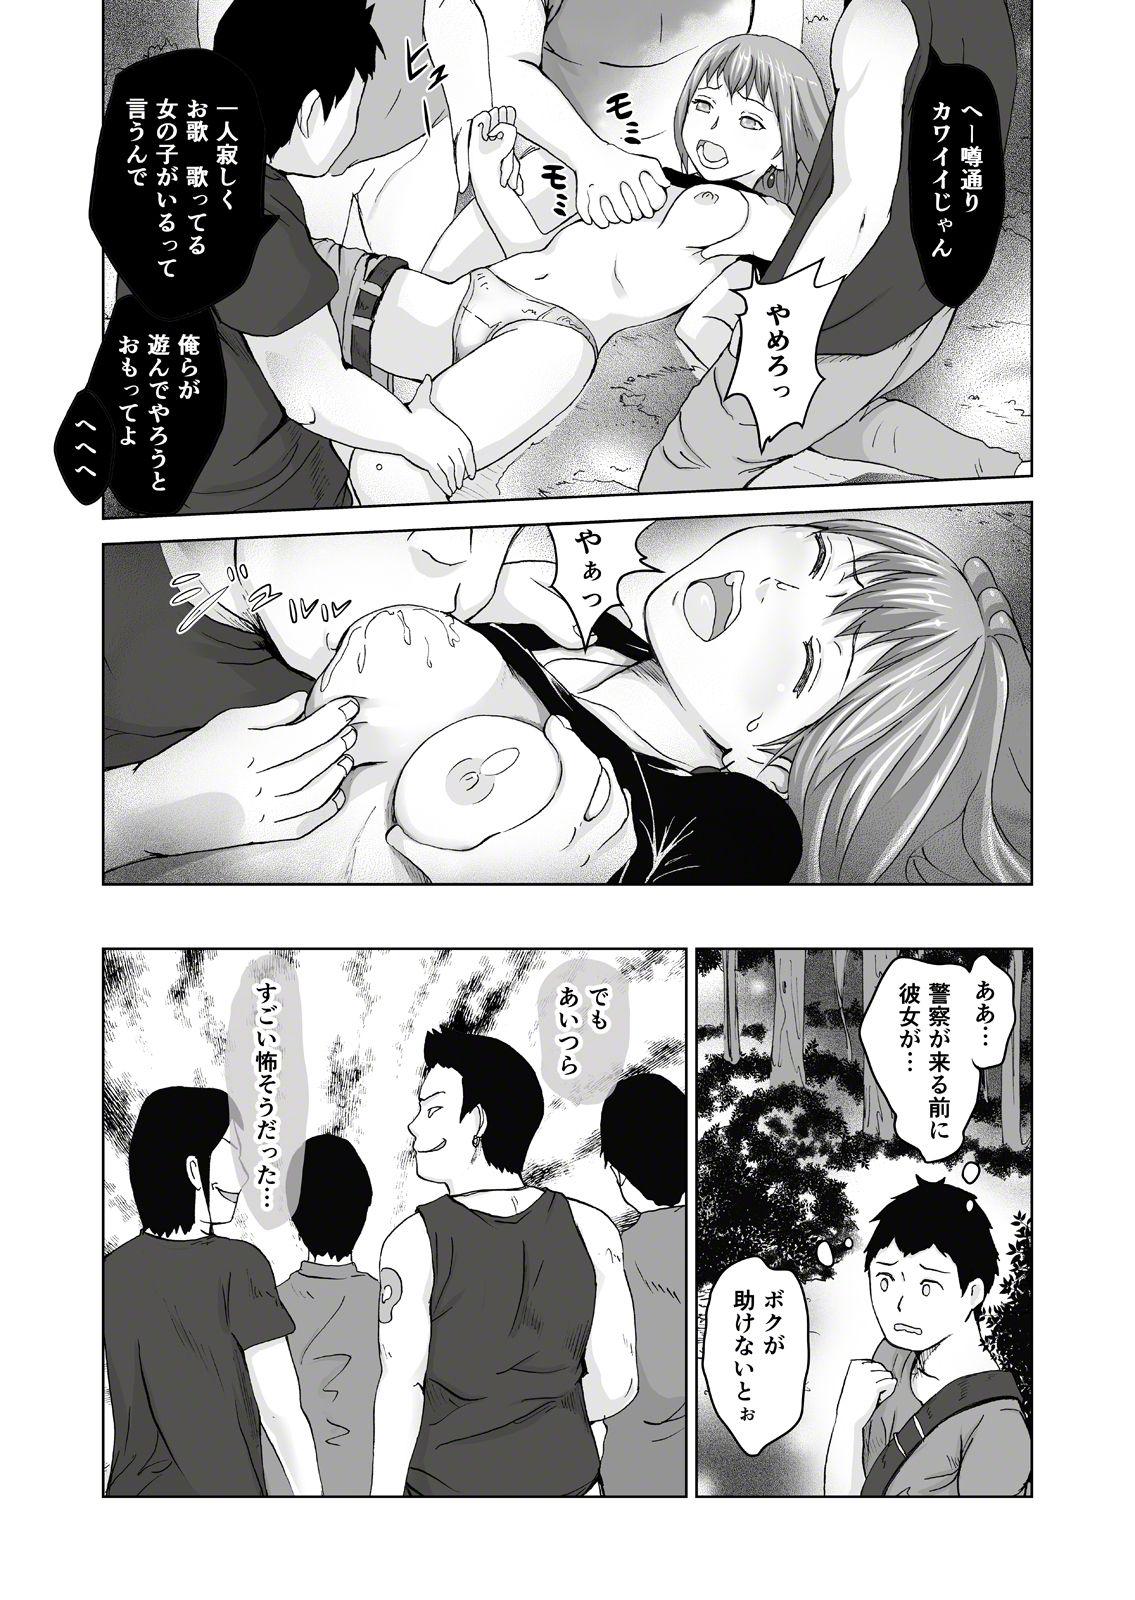 Blowing Jinsei o Kuruwase Syndrome - Original Ex Girlfriend - Page 10